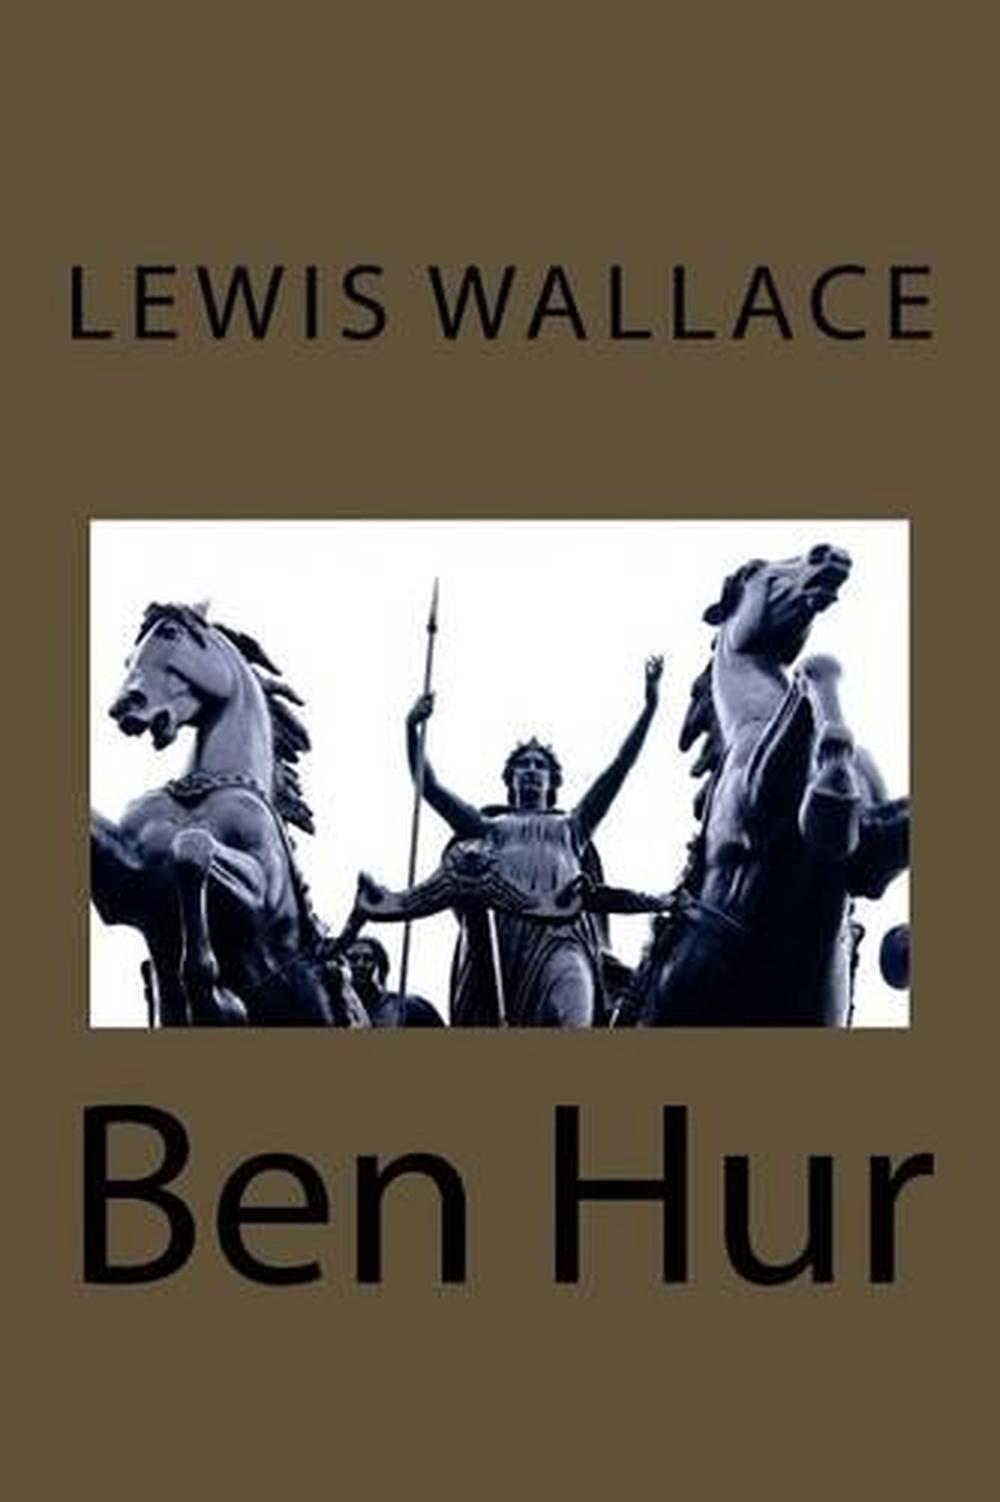 ben hur book 1880